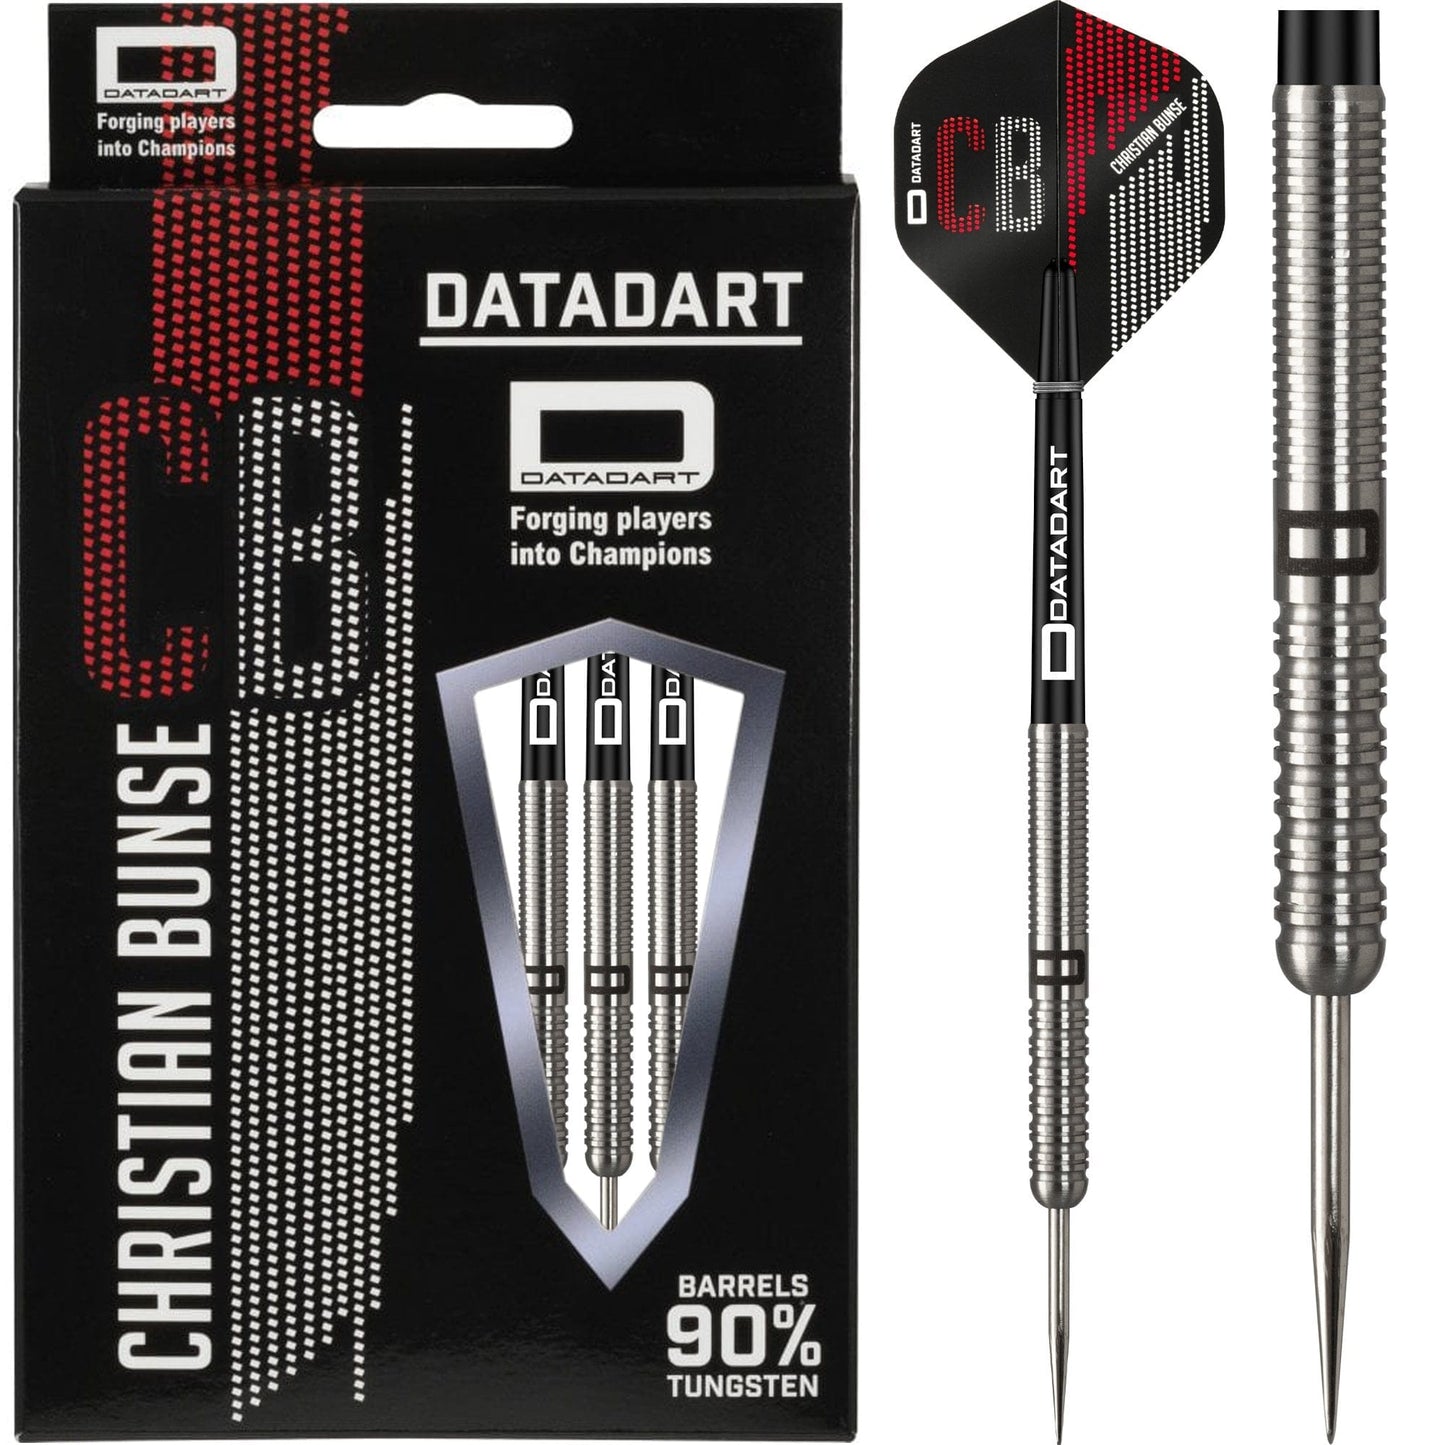 Datadart Christian Bunse Darts - Steel Tip - Ringed 21g